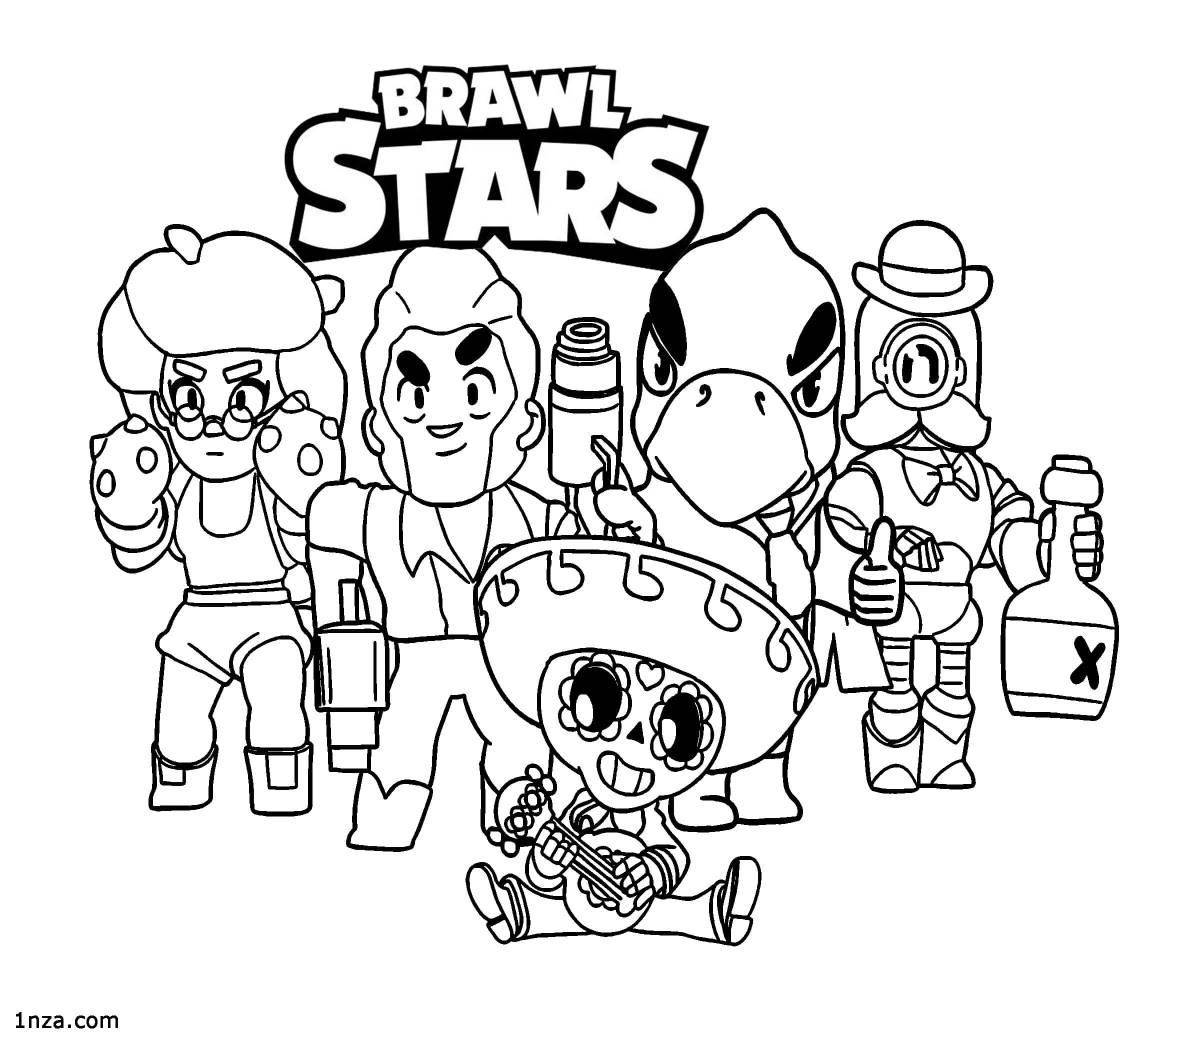 Bravo stars promotion poster